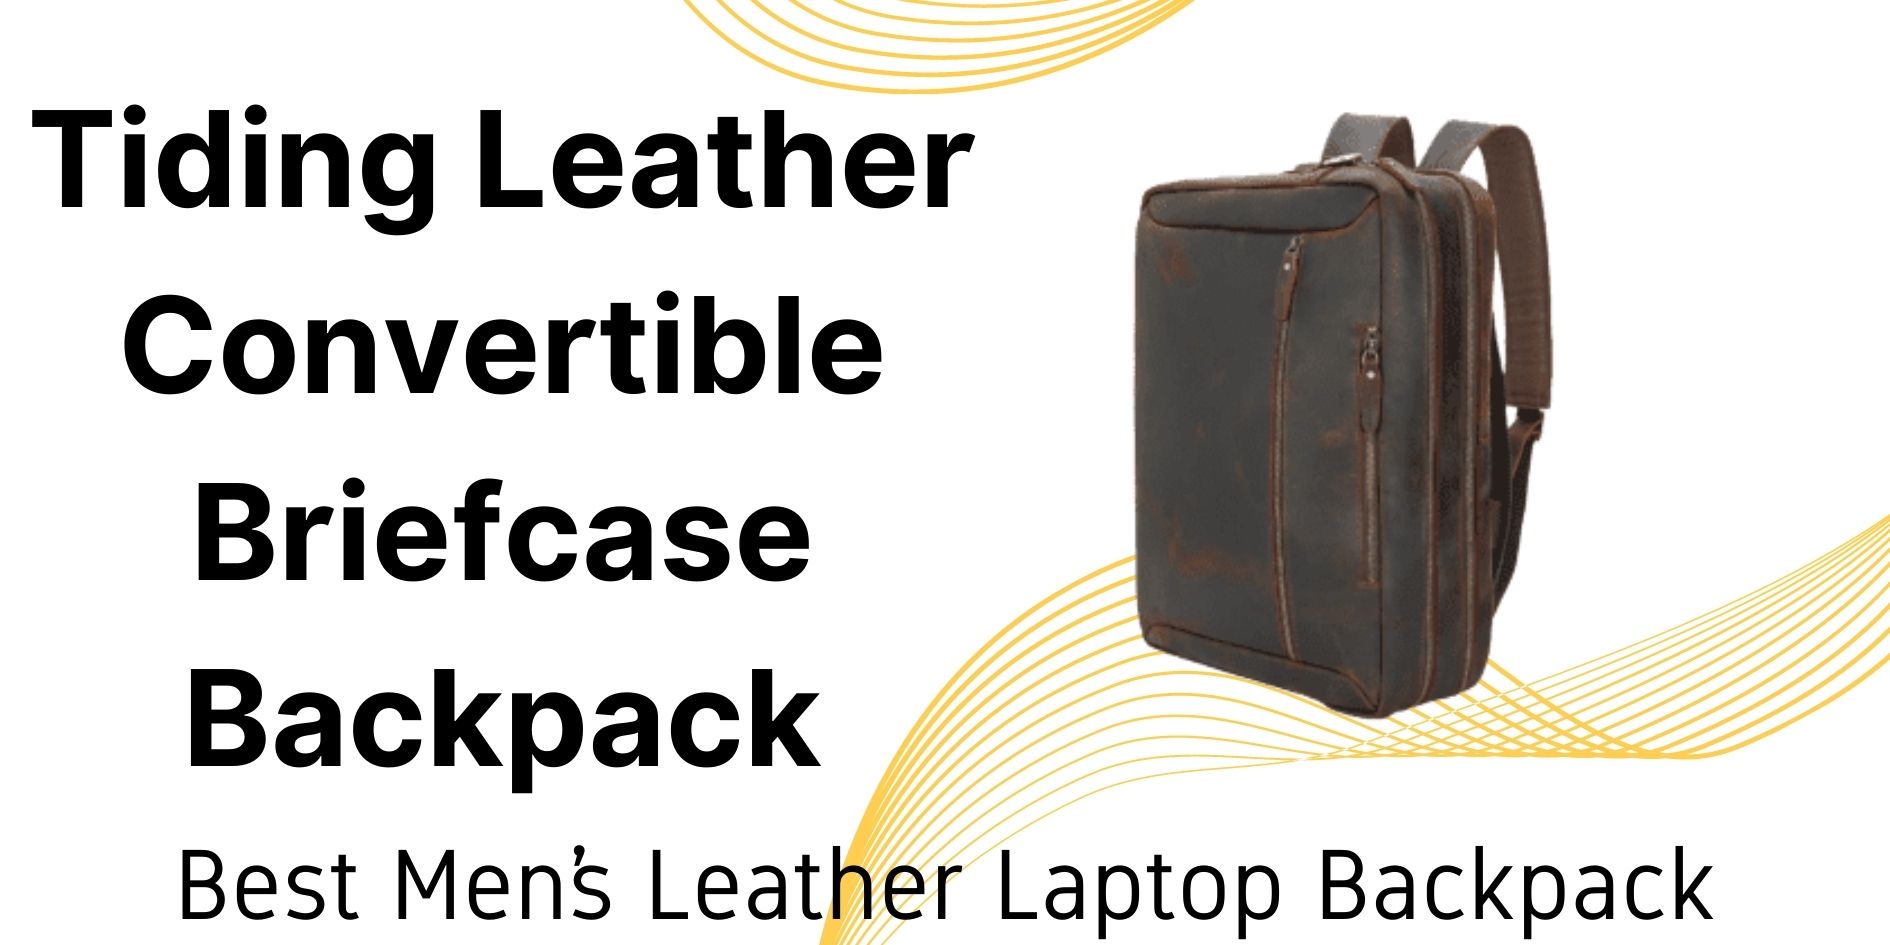 Best Men’s Leather Laptop Backpack